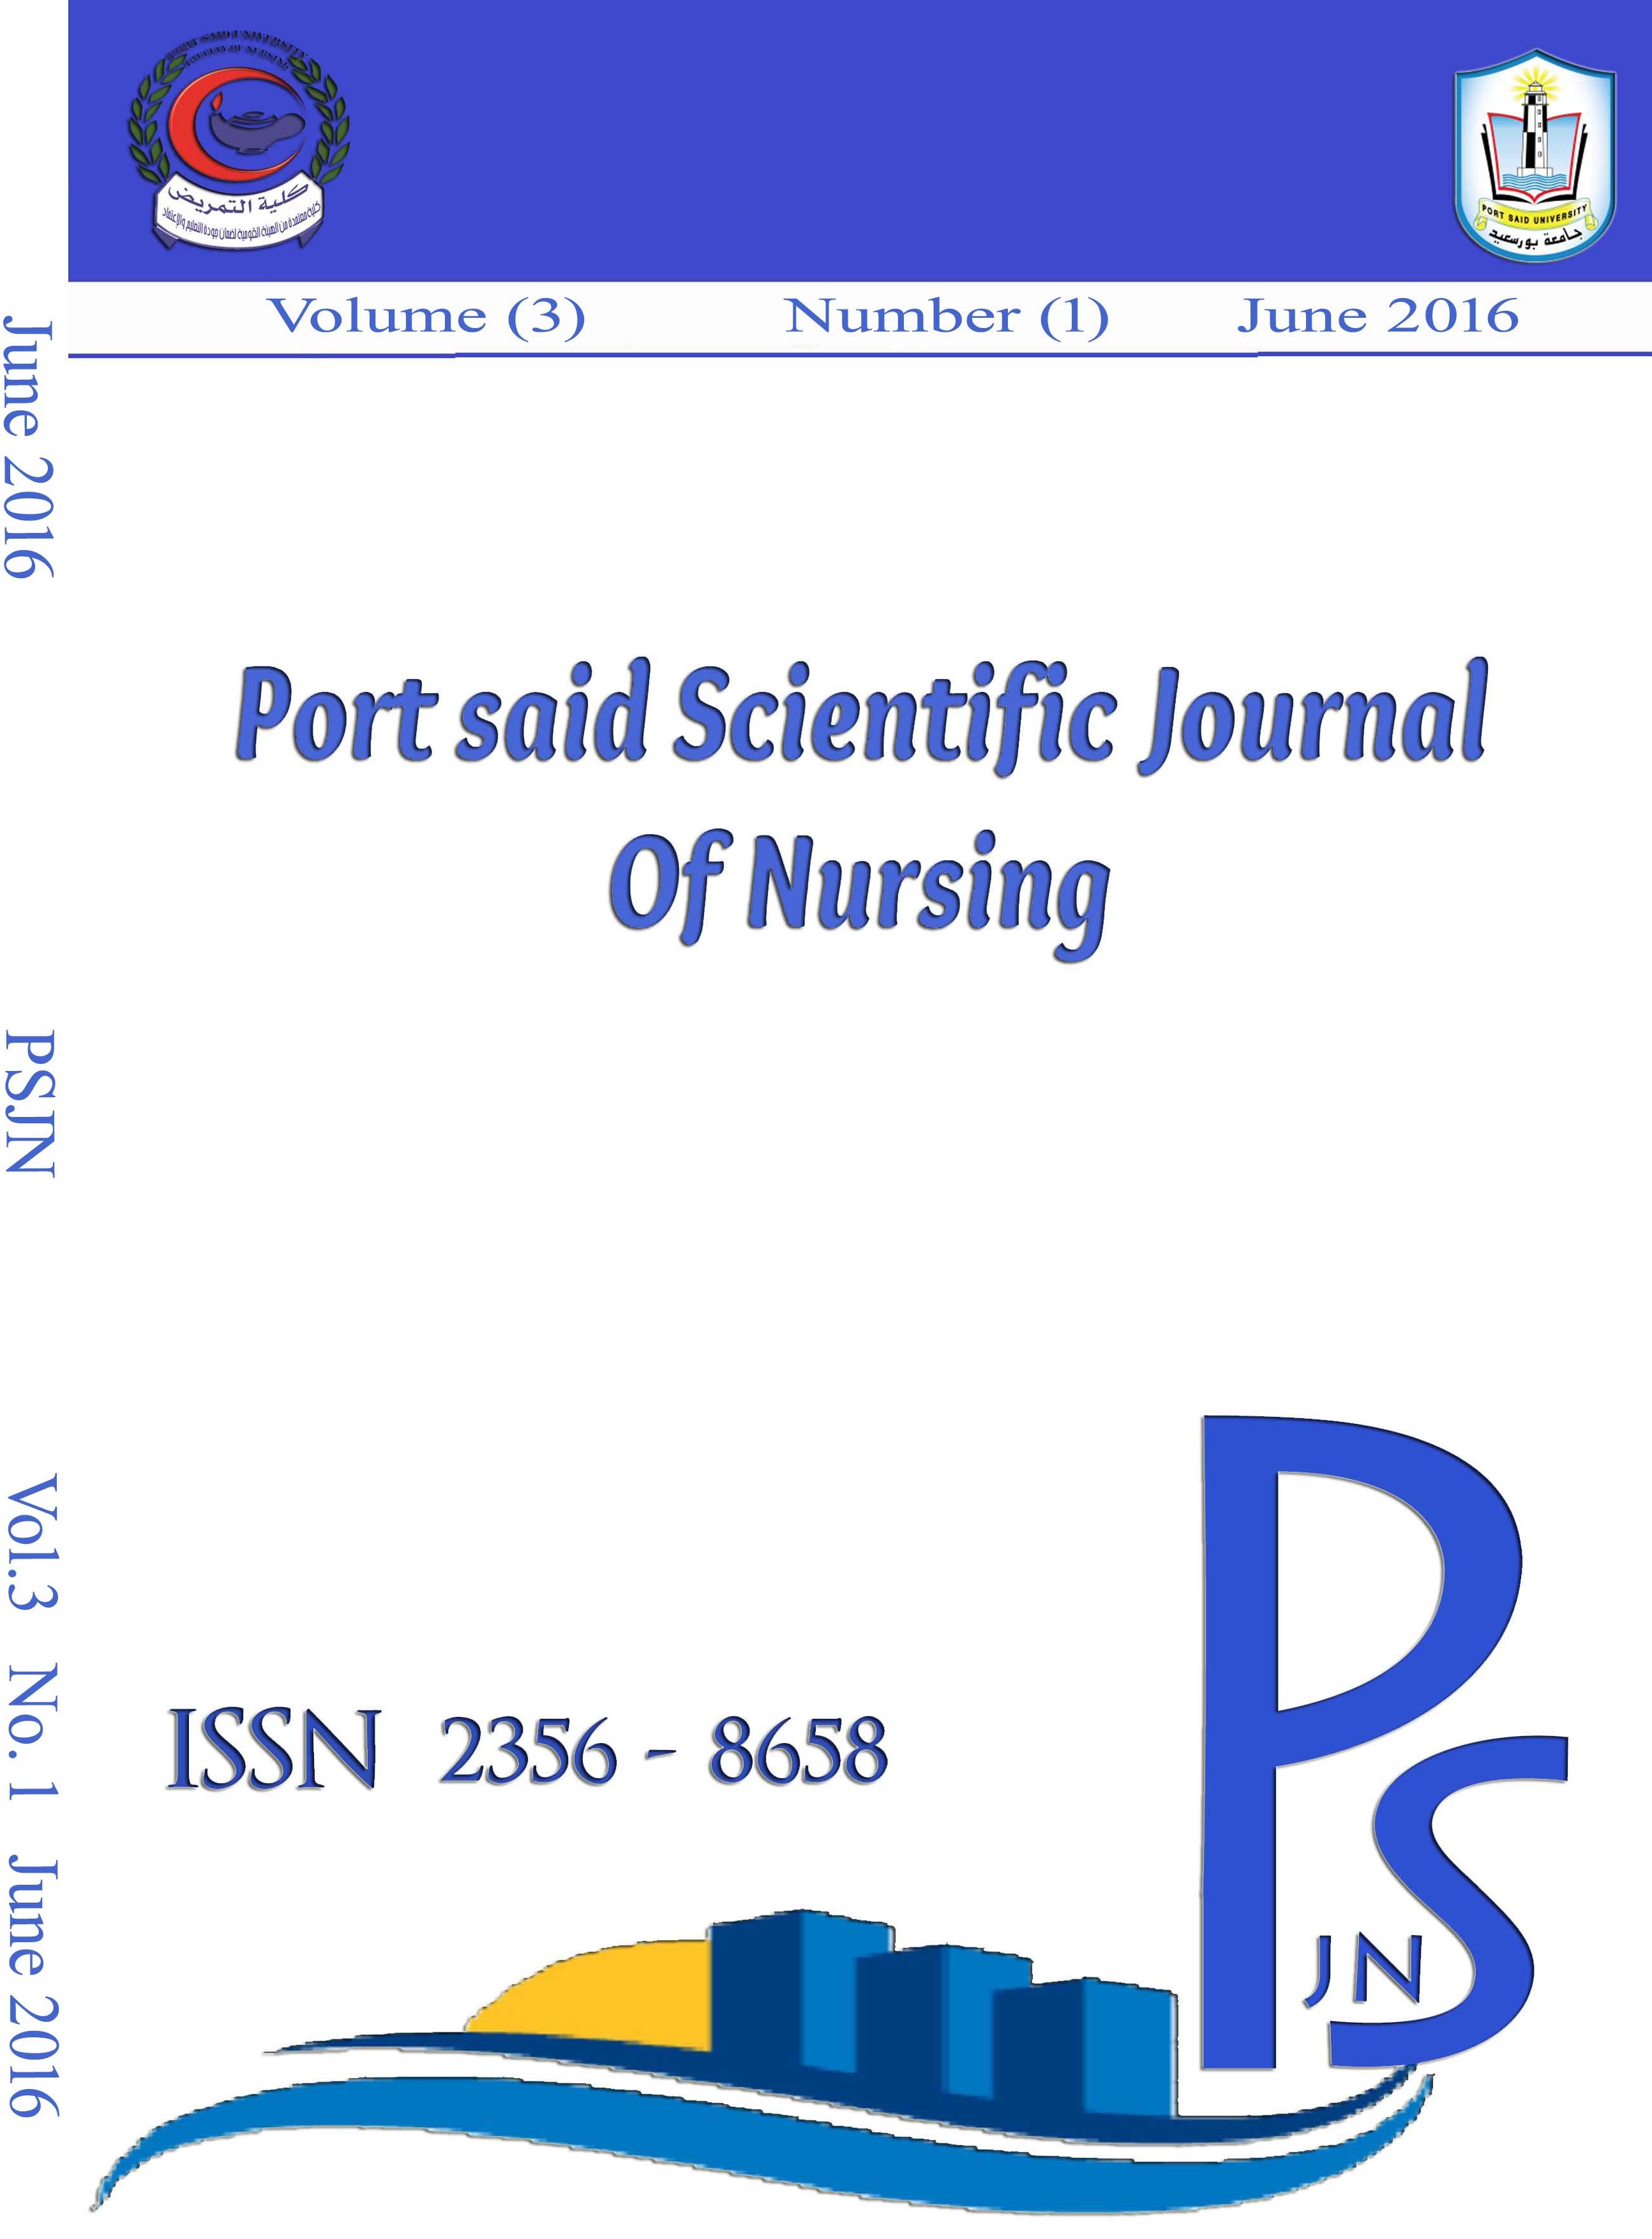 Port Said Scientific Journal of Nursing